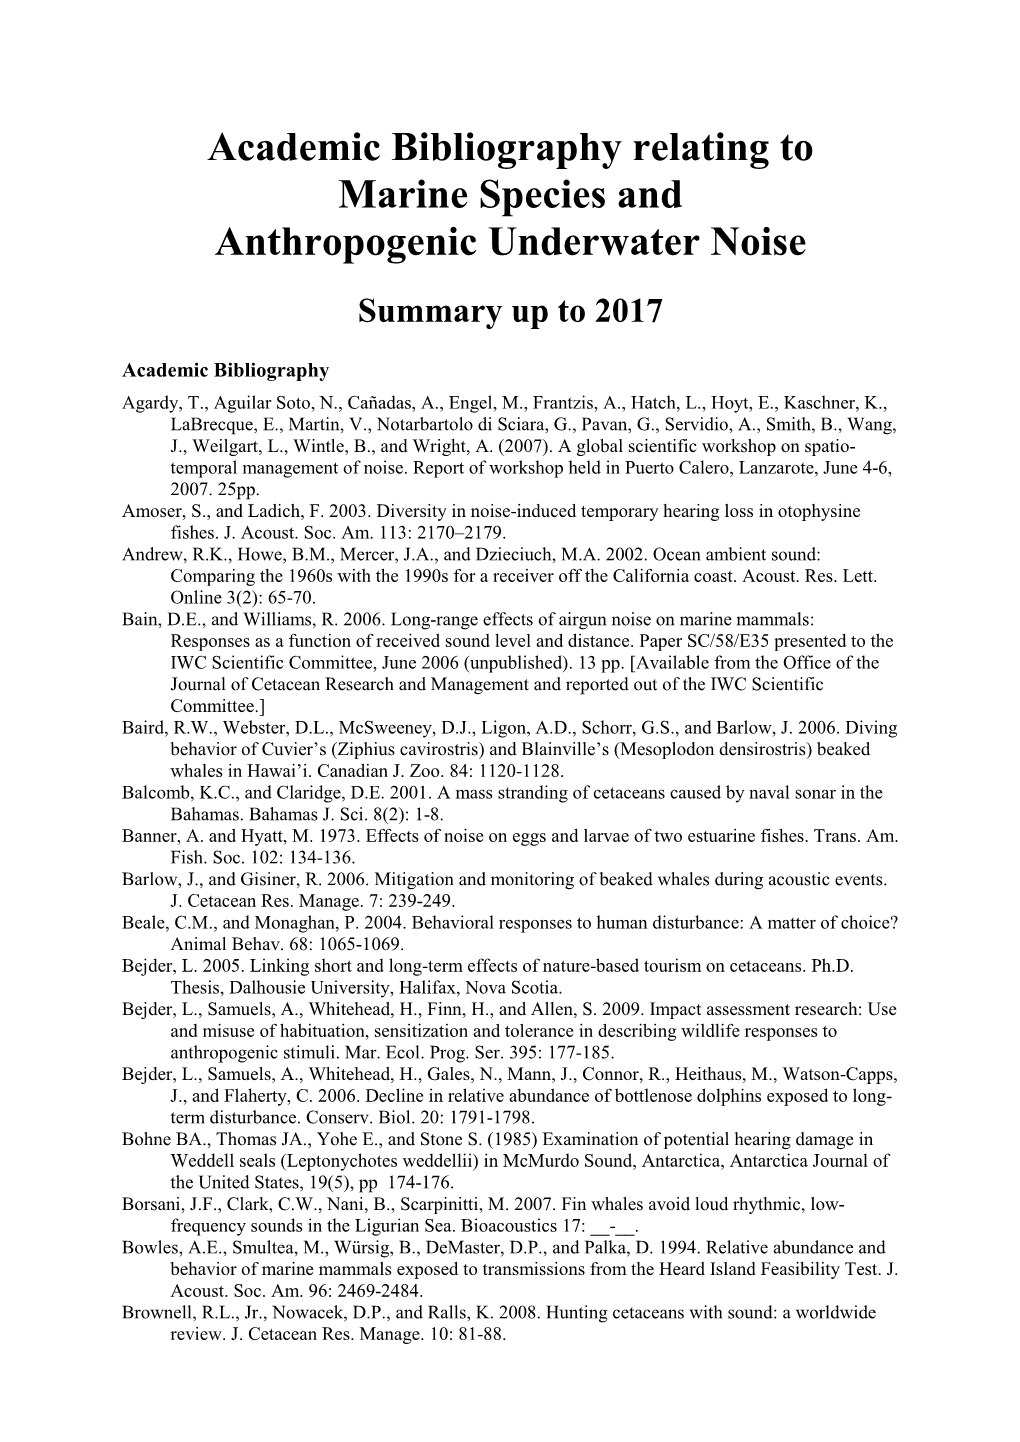 Academic Bibliography Relating to Marine Species and Anthropogenic Underwater Noise